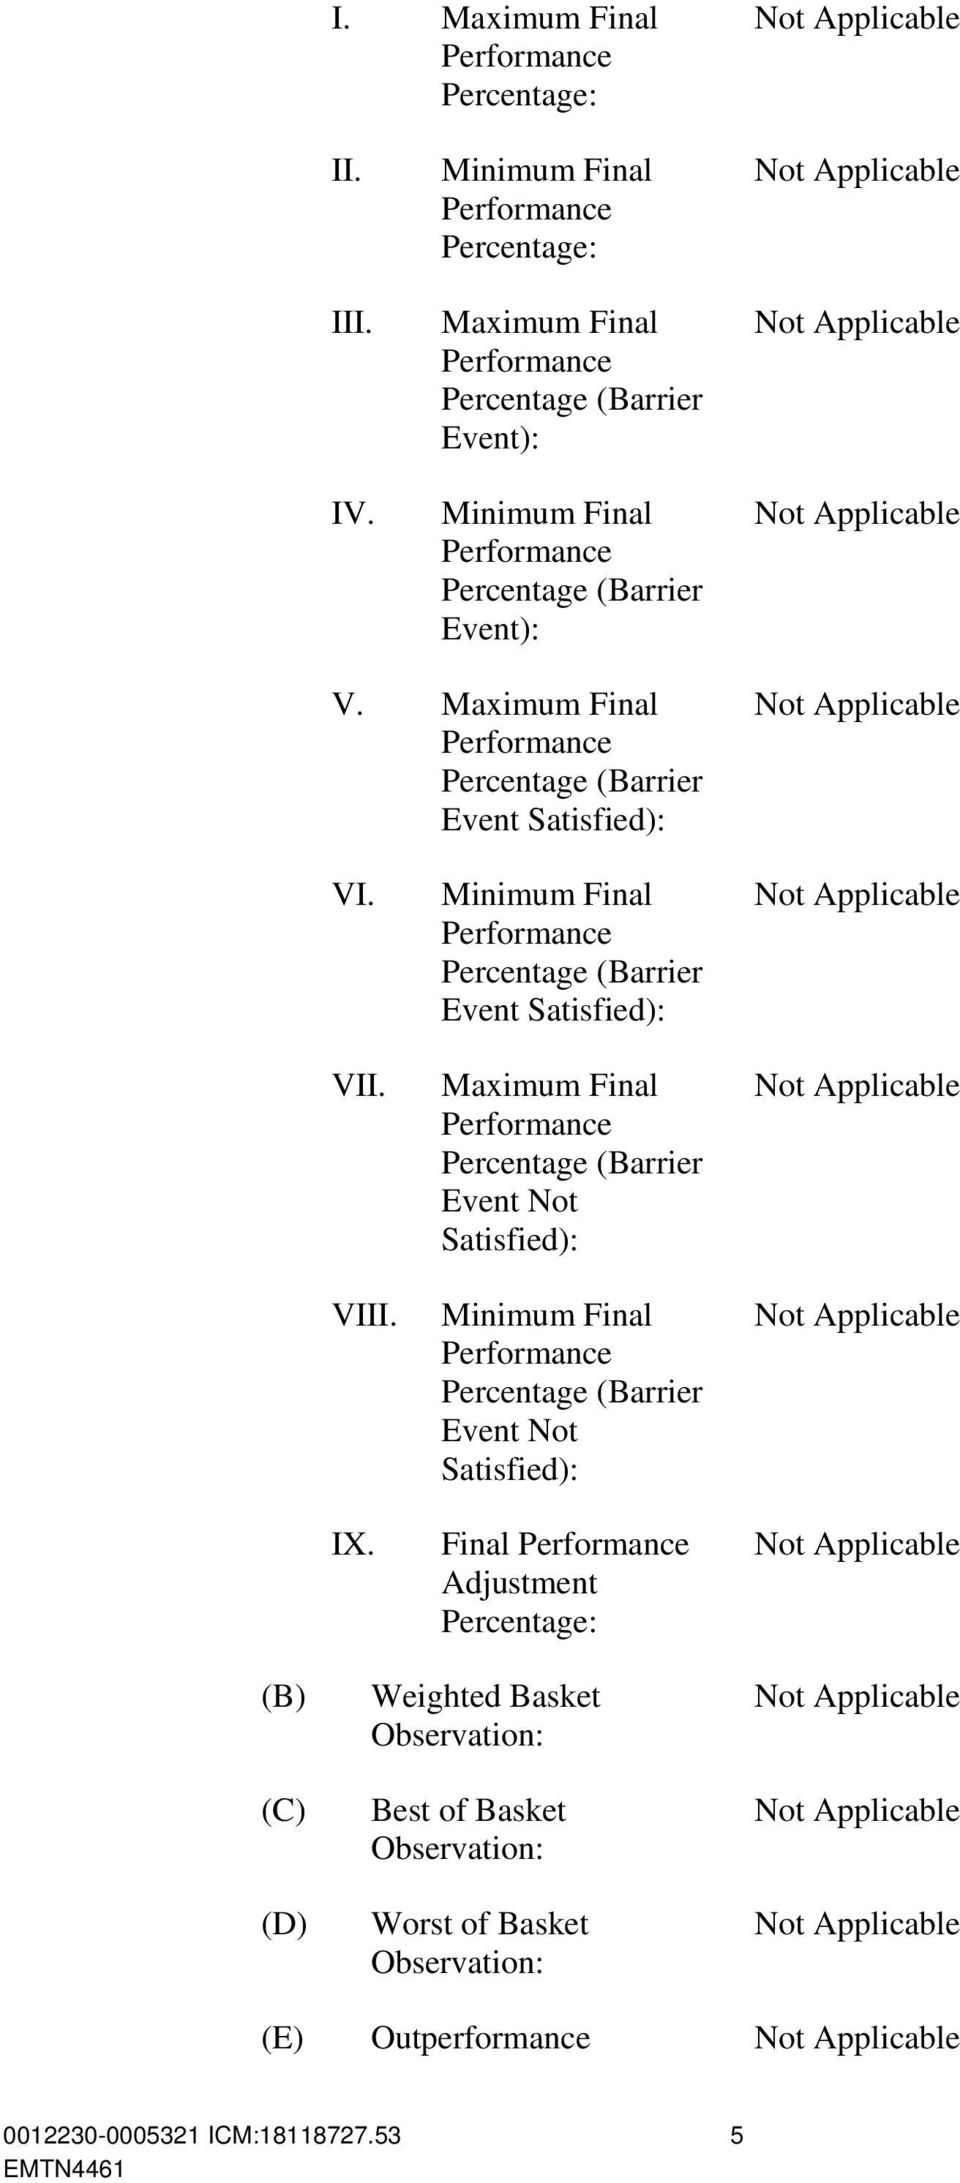 Maximum Final Performance Percentage (Barrier Event Satisfied): VI. VII. VIII. IX.